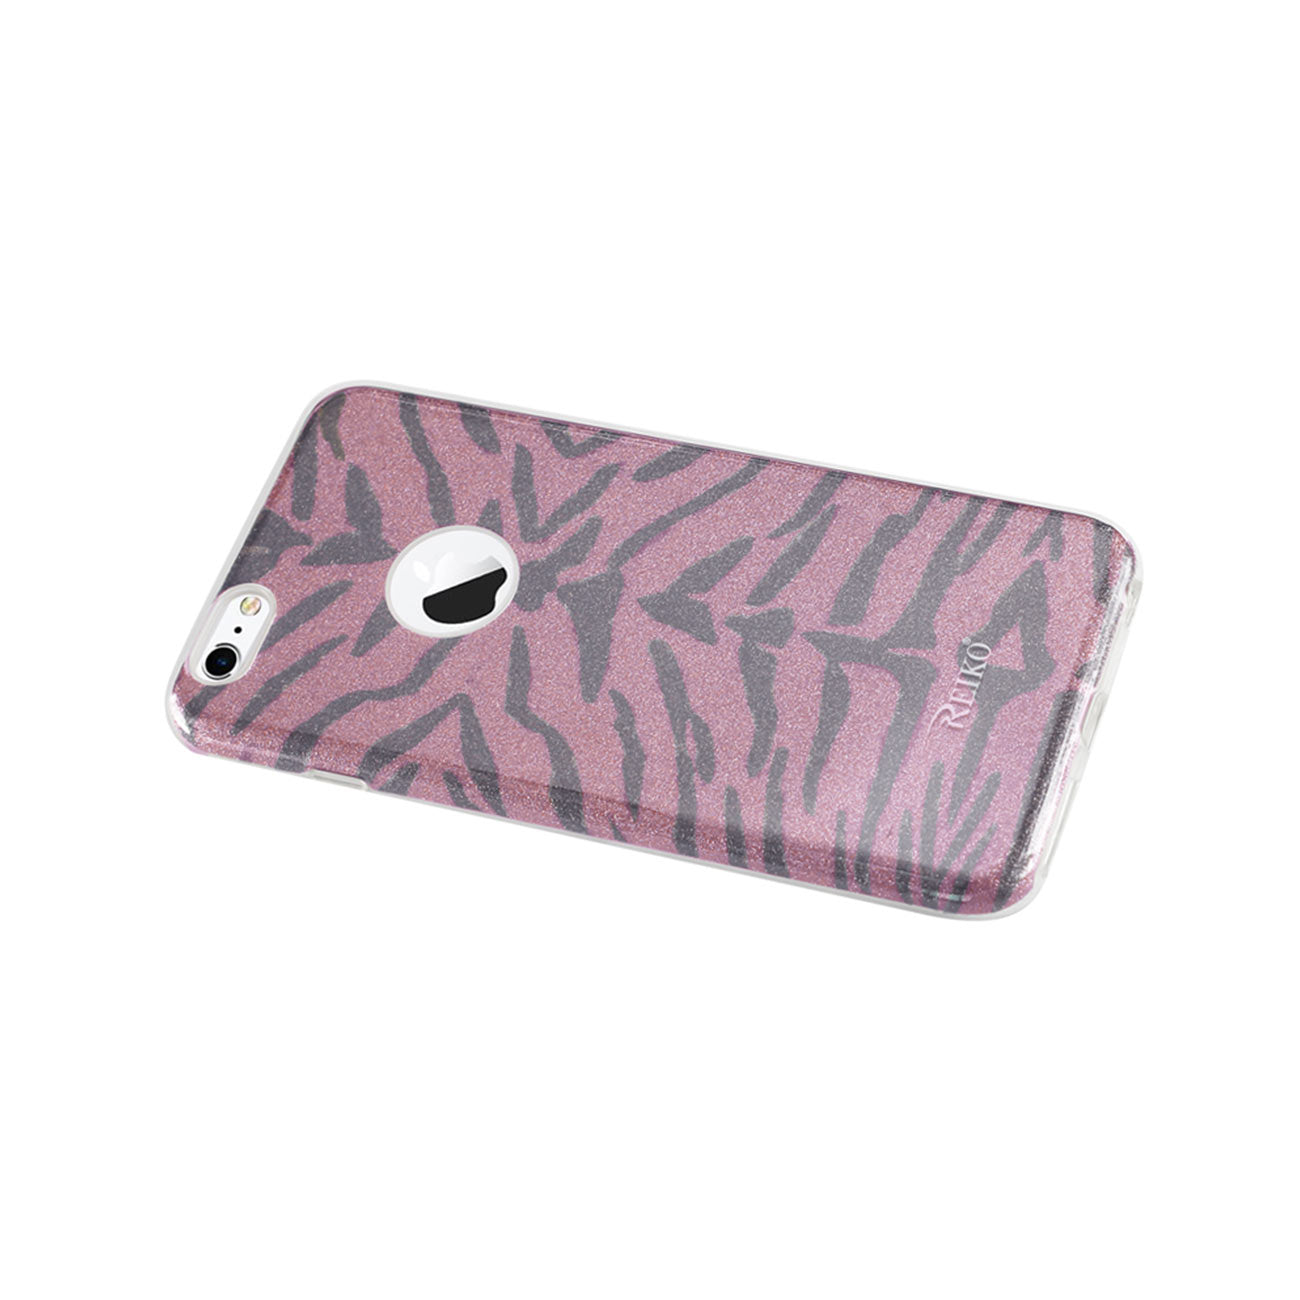 Case Hybrid Shine Glitter Shimmer Tiger Stripe iPhone 6 Plus/ 6S Plus Hot Pink Color